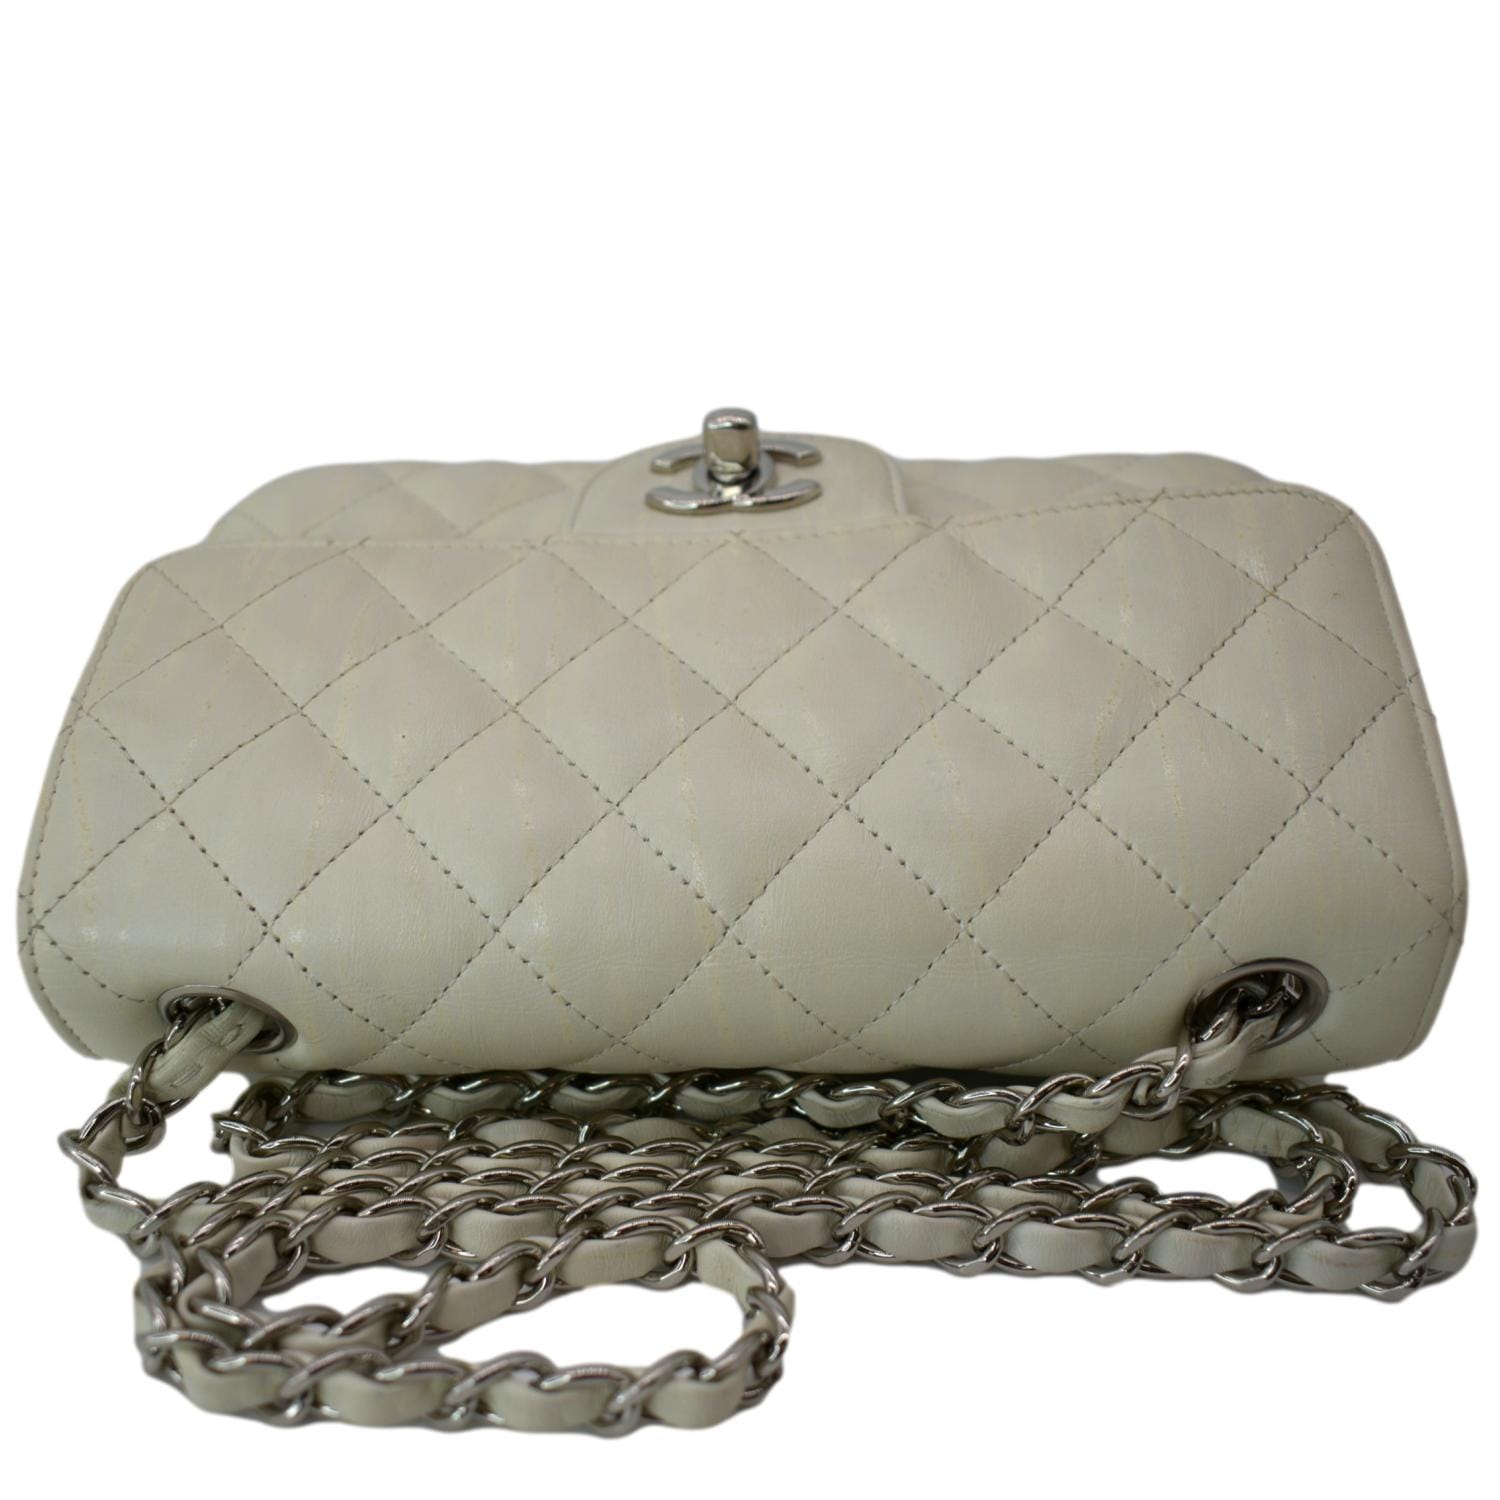 Chanel Grained Calfskin Flap Bag